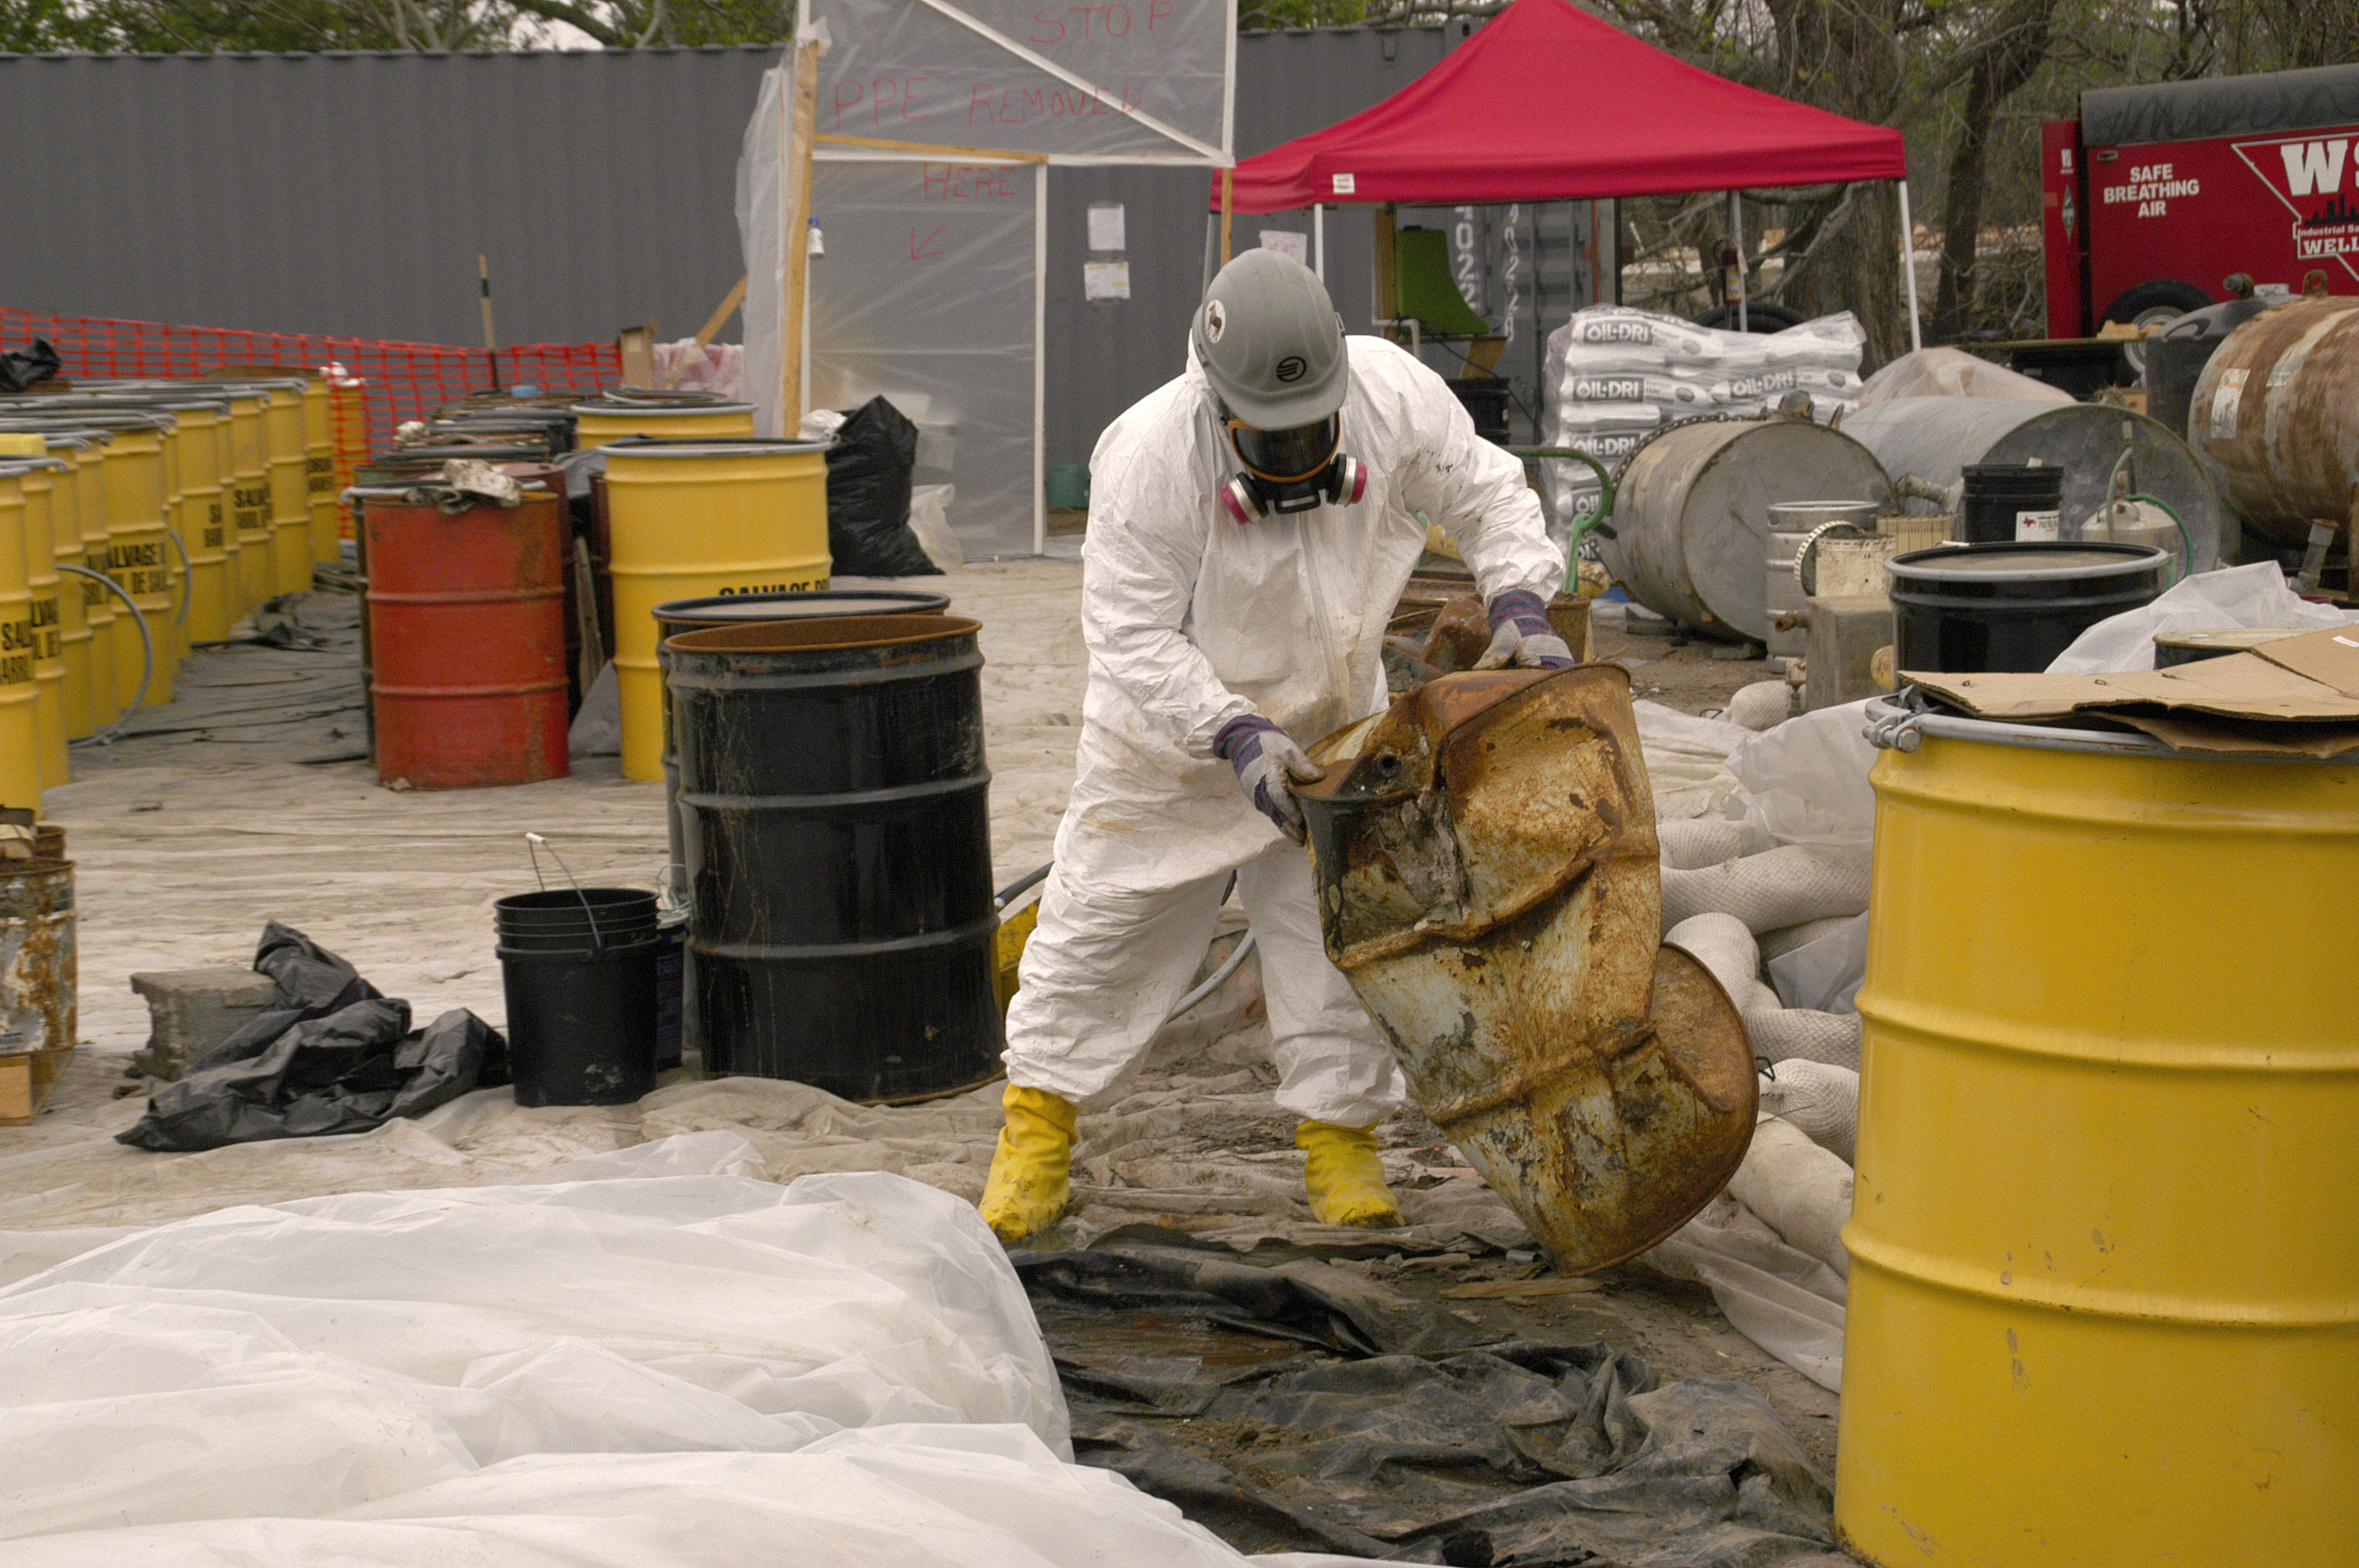 A worker in hazmat suit checks a potentially hazardous barrel to determine its contents